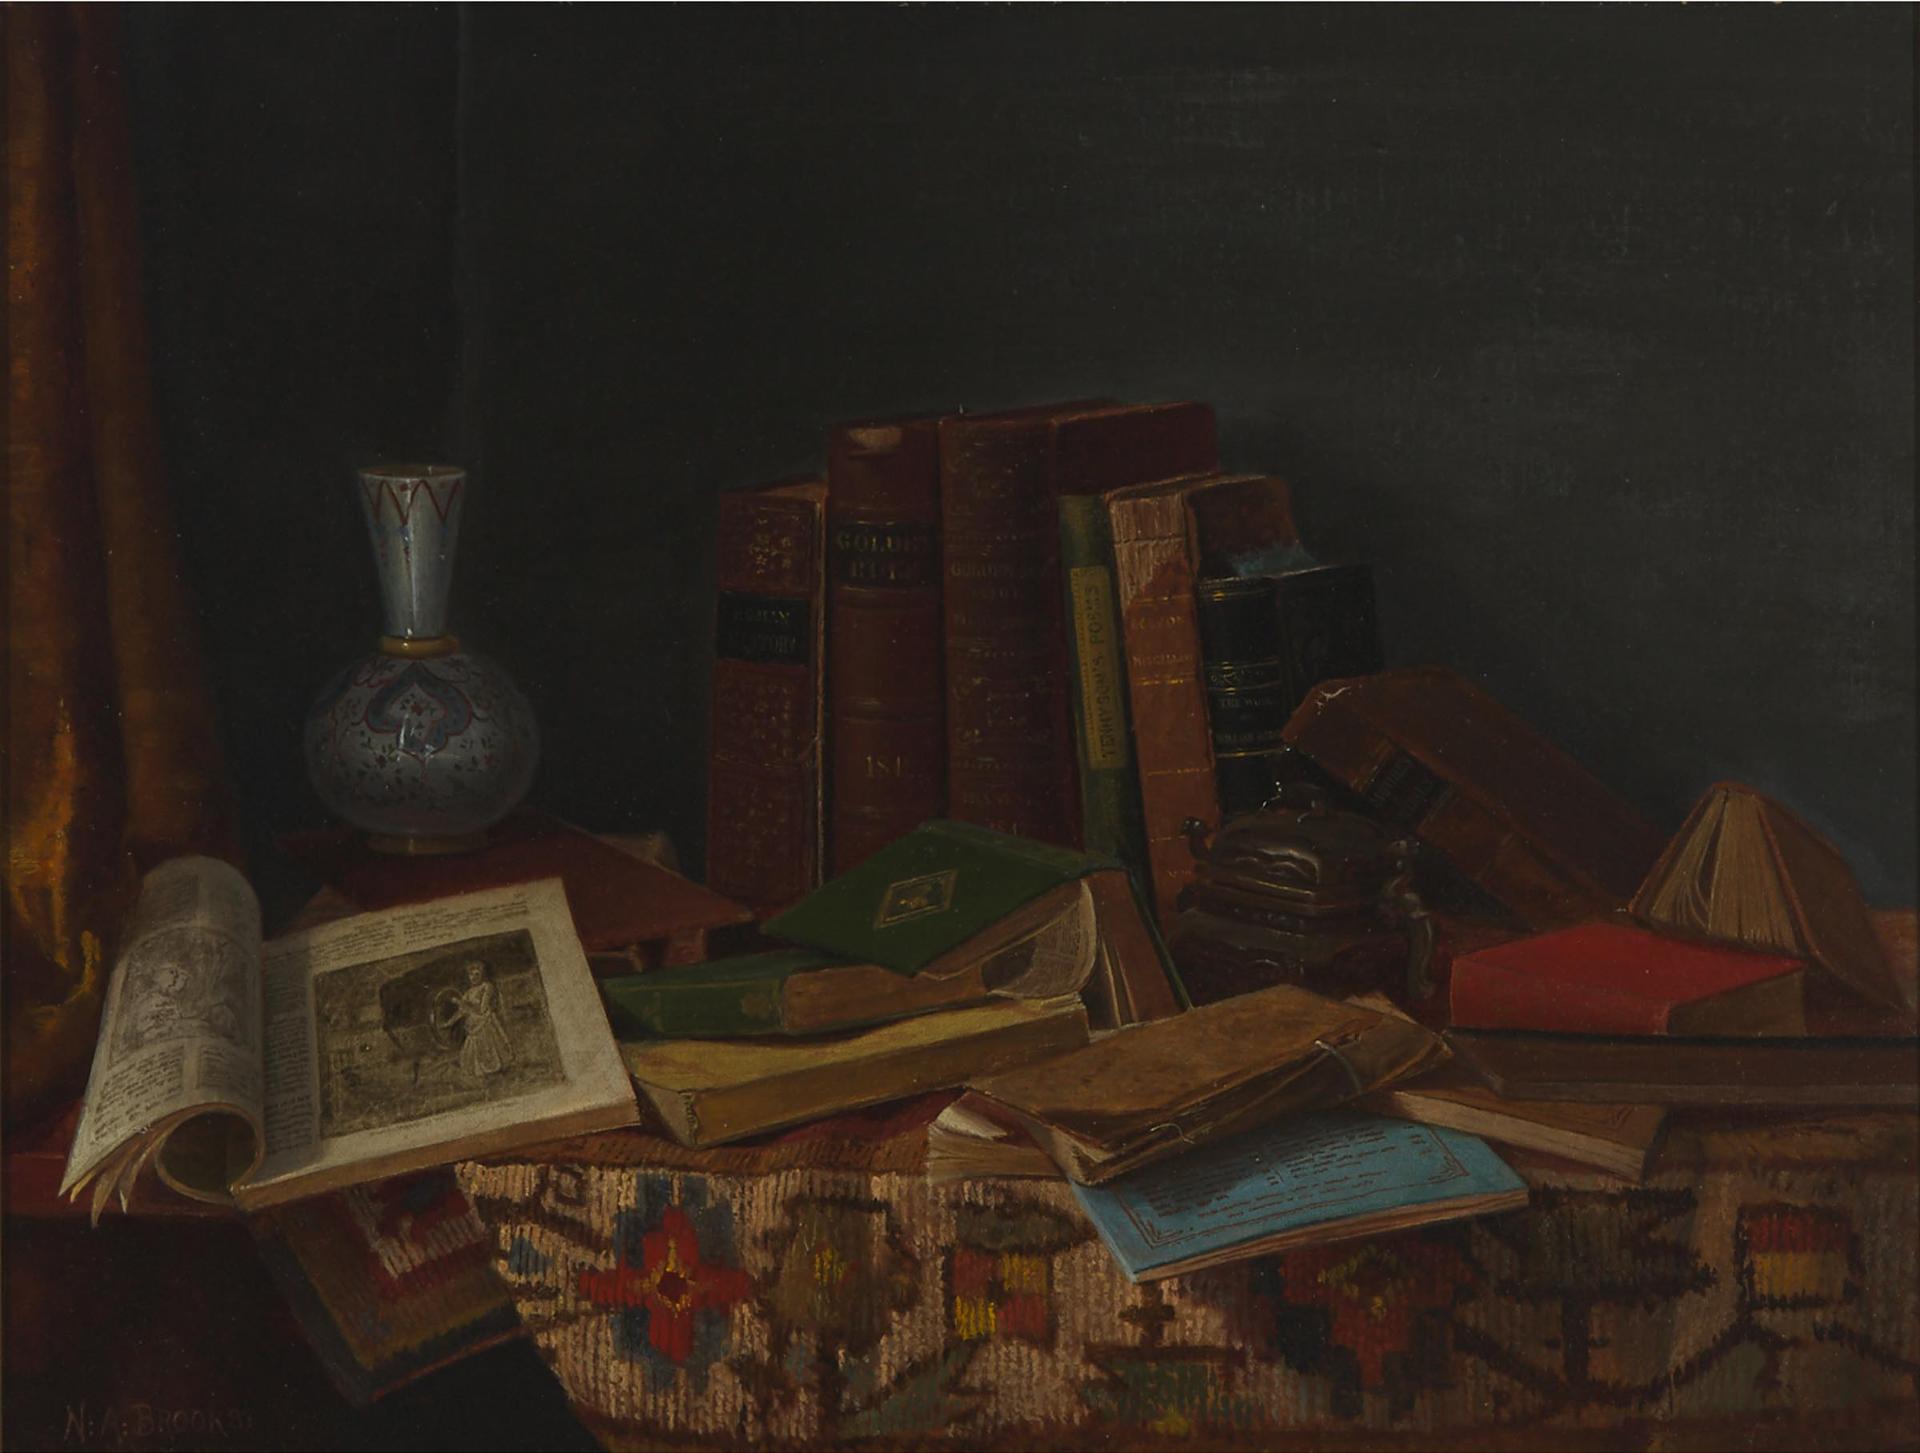 Nicholas Alden Brooks (1840-1904) - Still Life With Books, 1890